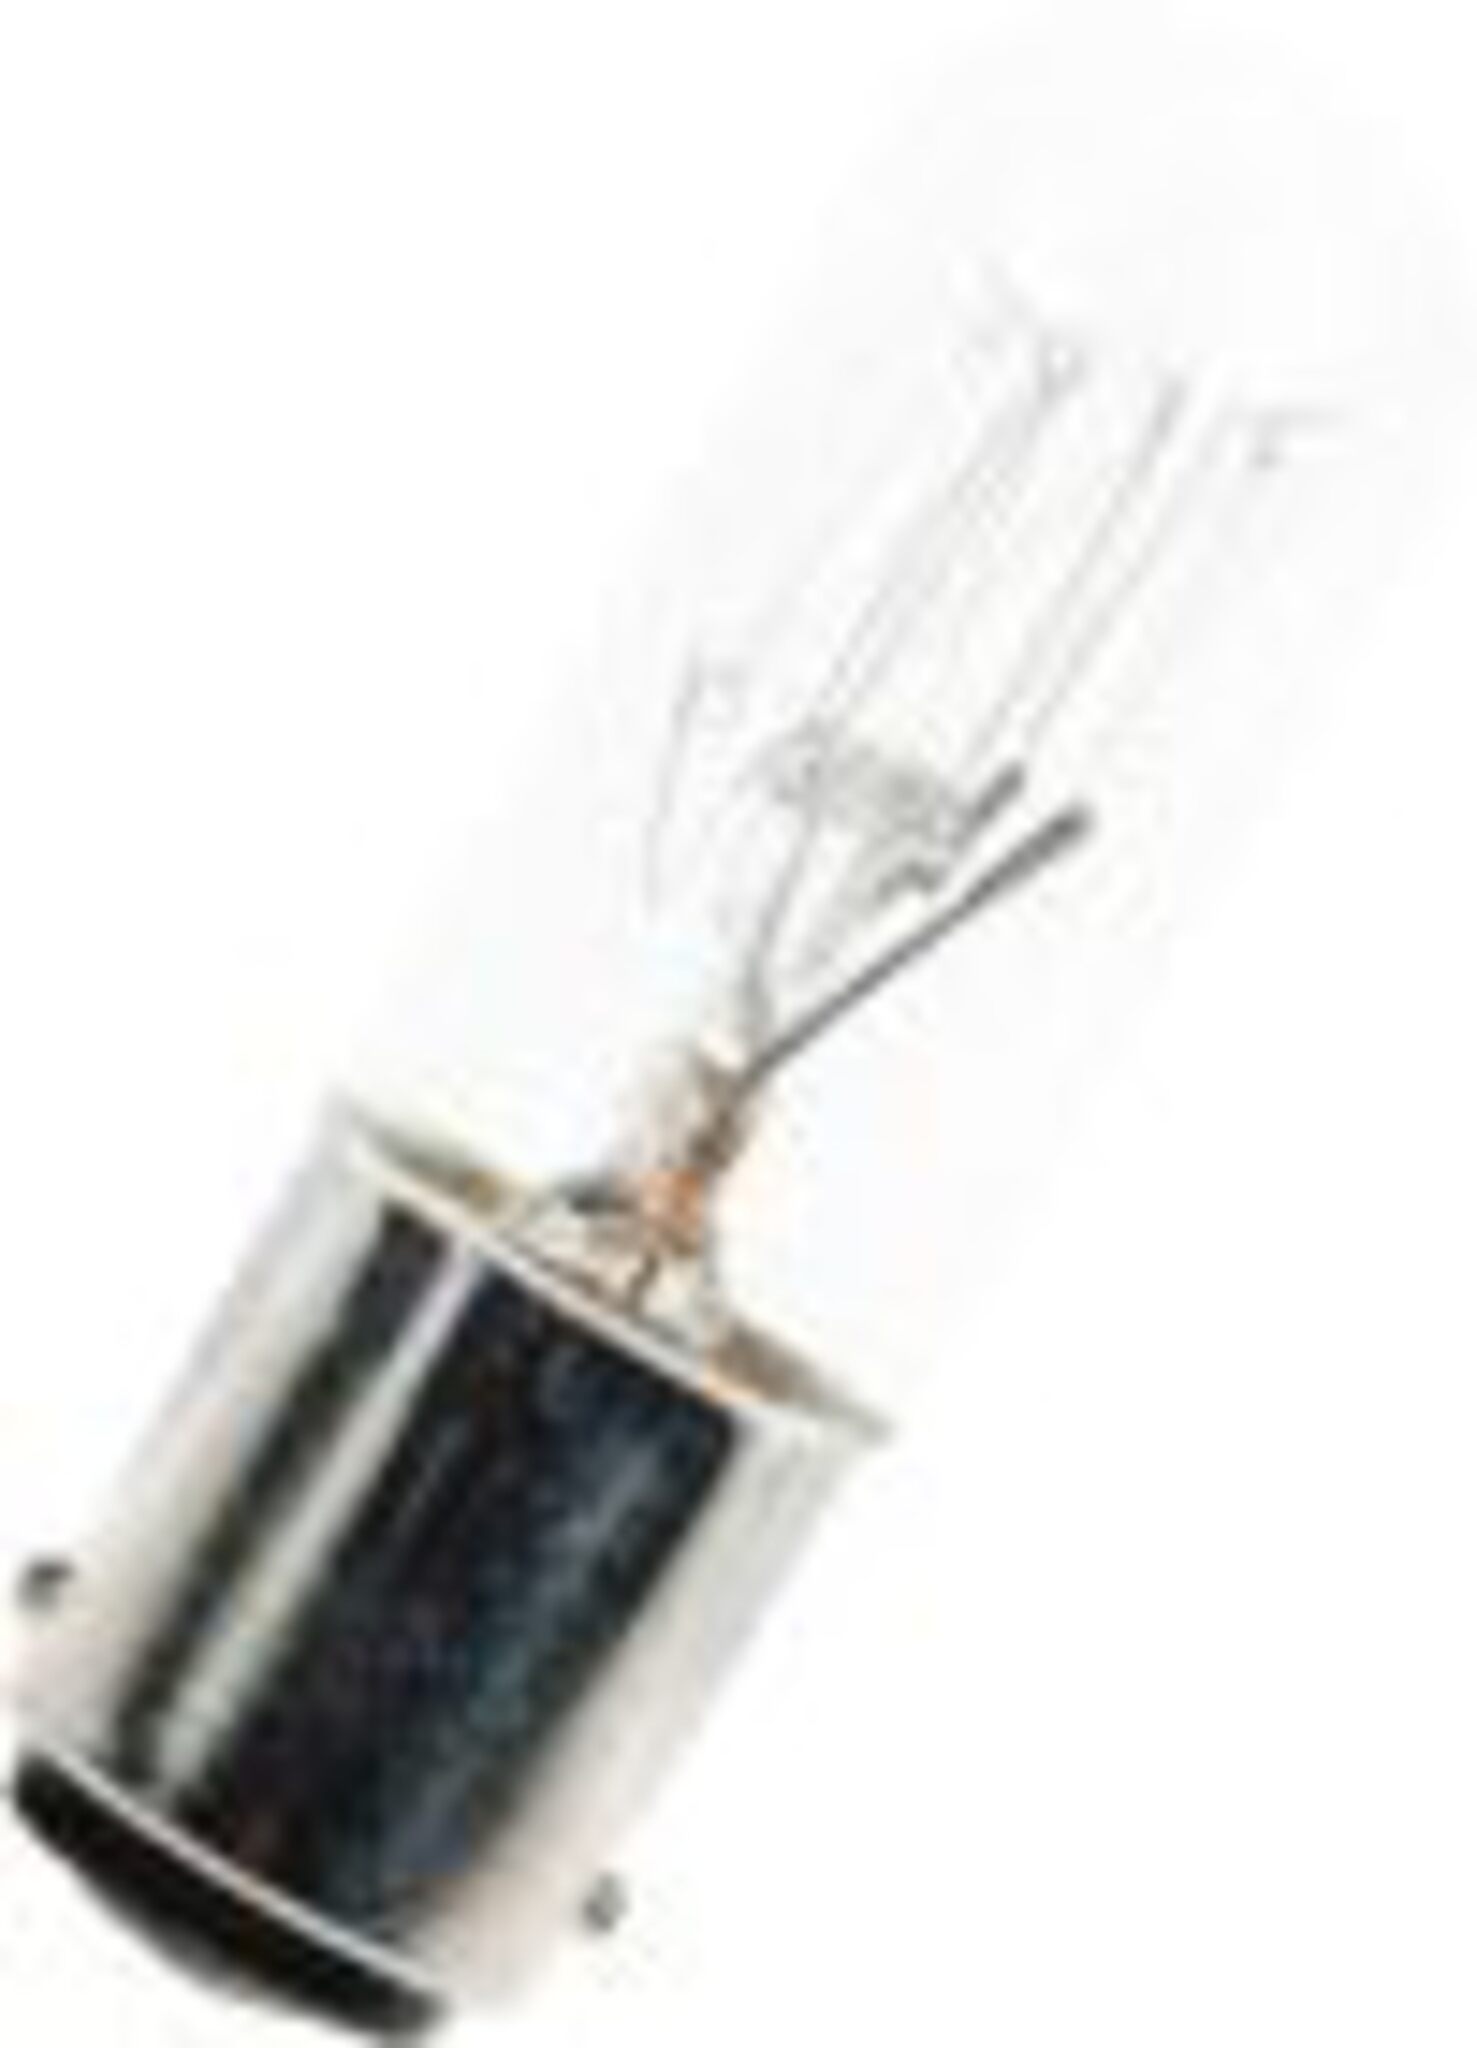 SPAHN-10 Stück Glühlampe 12V 10W Ba15d 18x35mm Glühbirne Lampe Birne 12Volt  10Watt neu 10er Pack